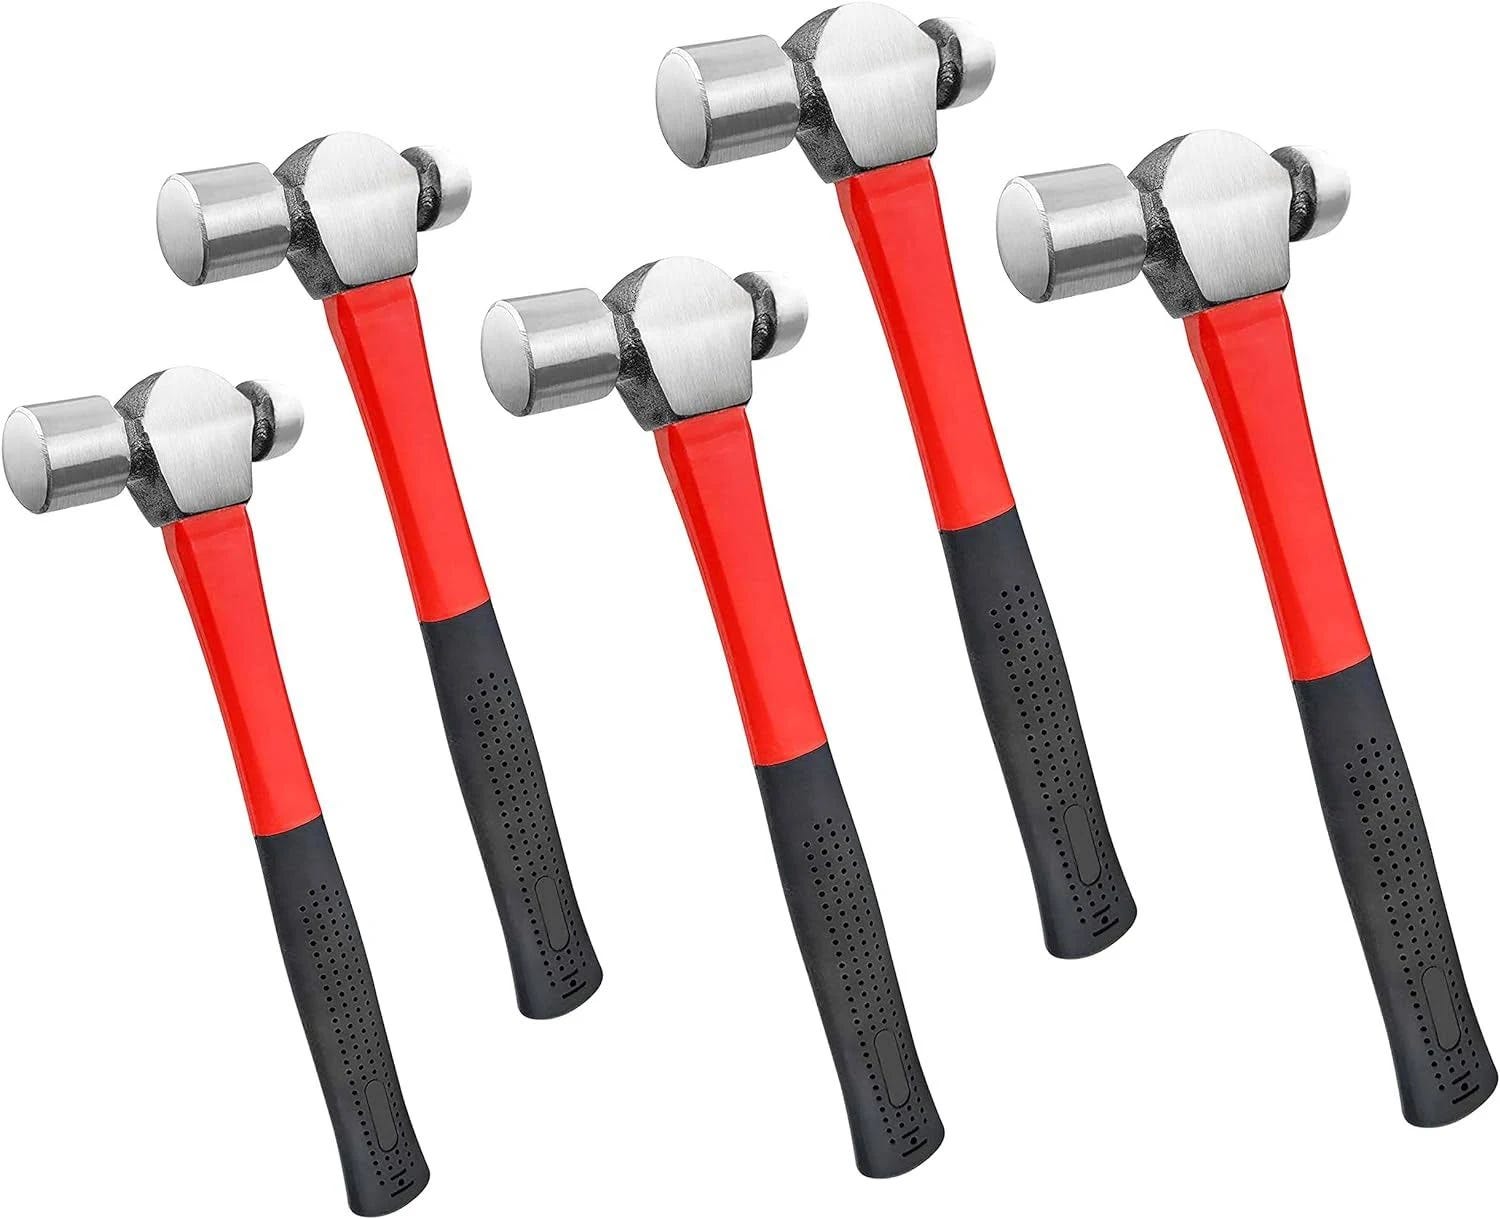 Premium Ball Peen Hammer Set for Variety of Metalworking Tasks | Image